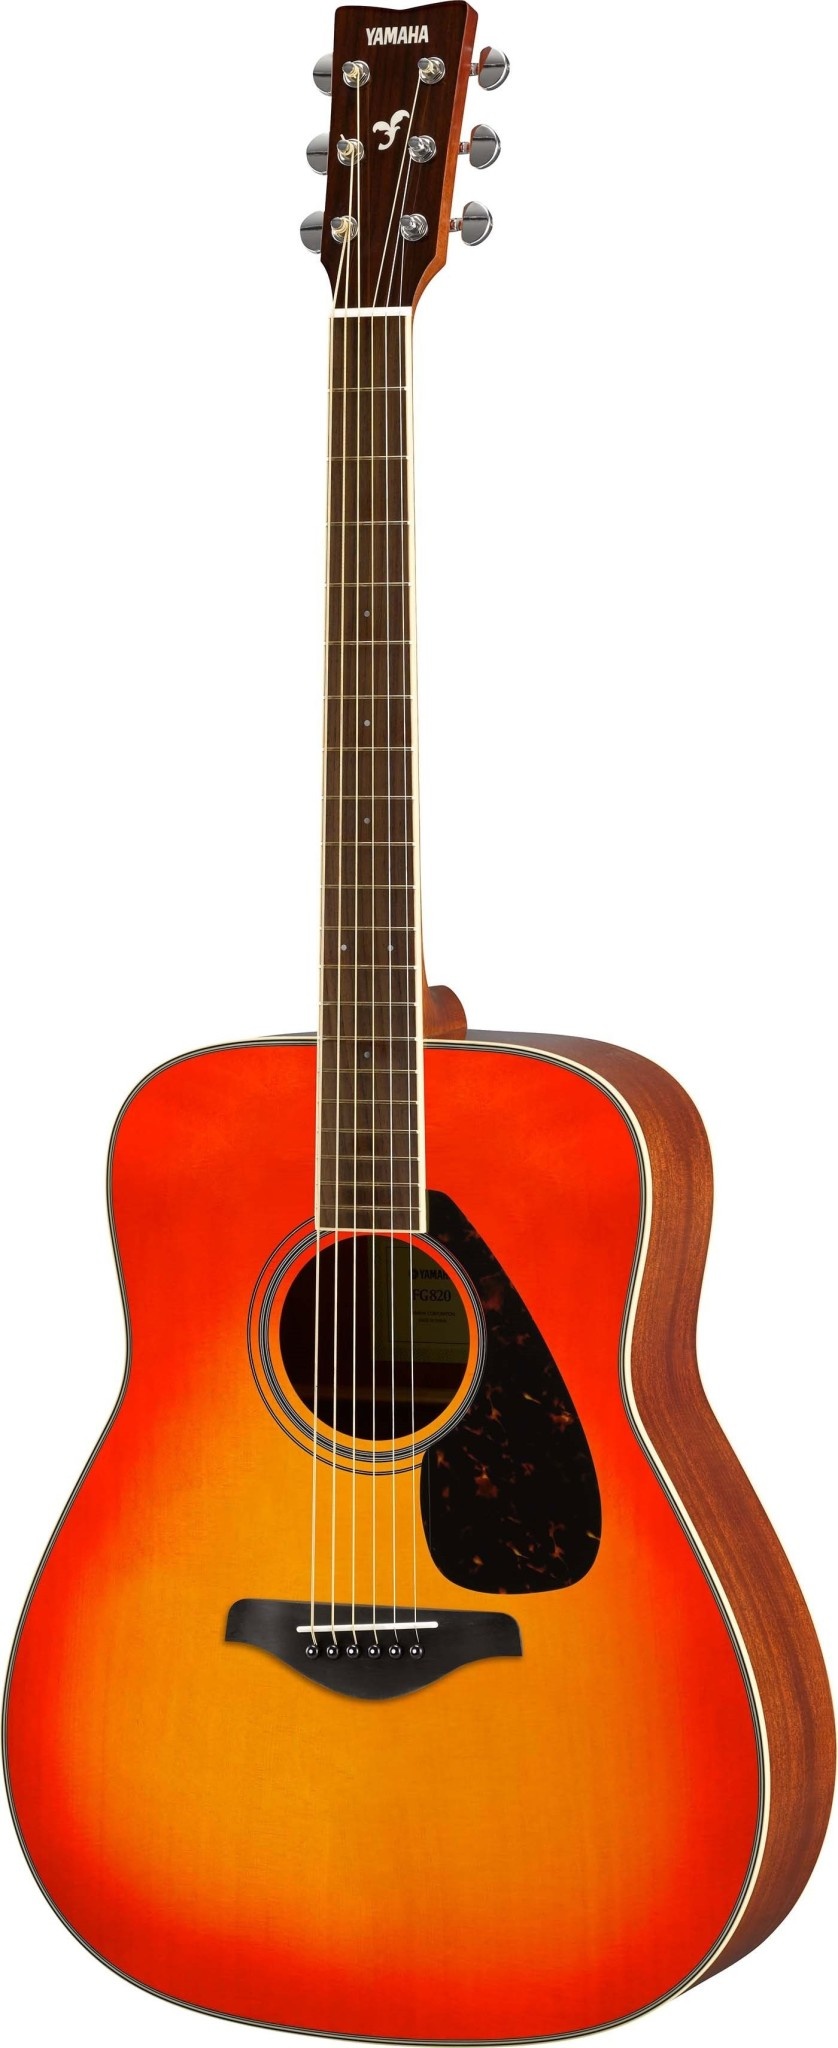 Yamaha Yamaha FG820 Acoustic Guitar